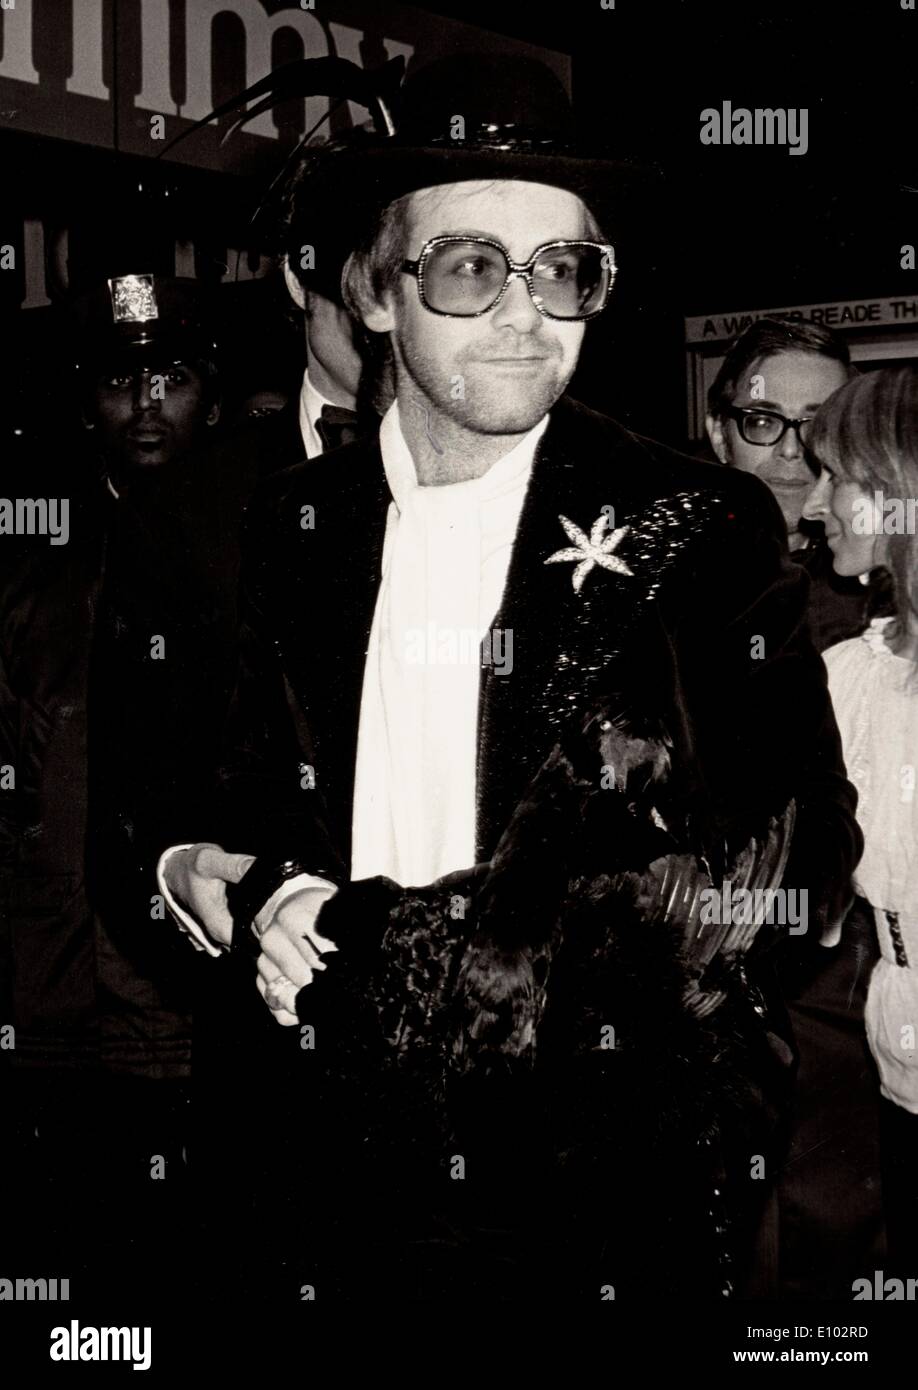 Singer Elton John at 'Tommy' film premiere Stock Photo